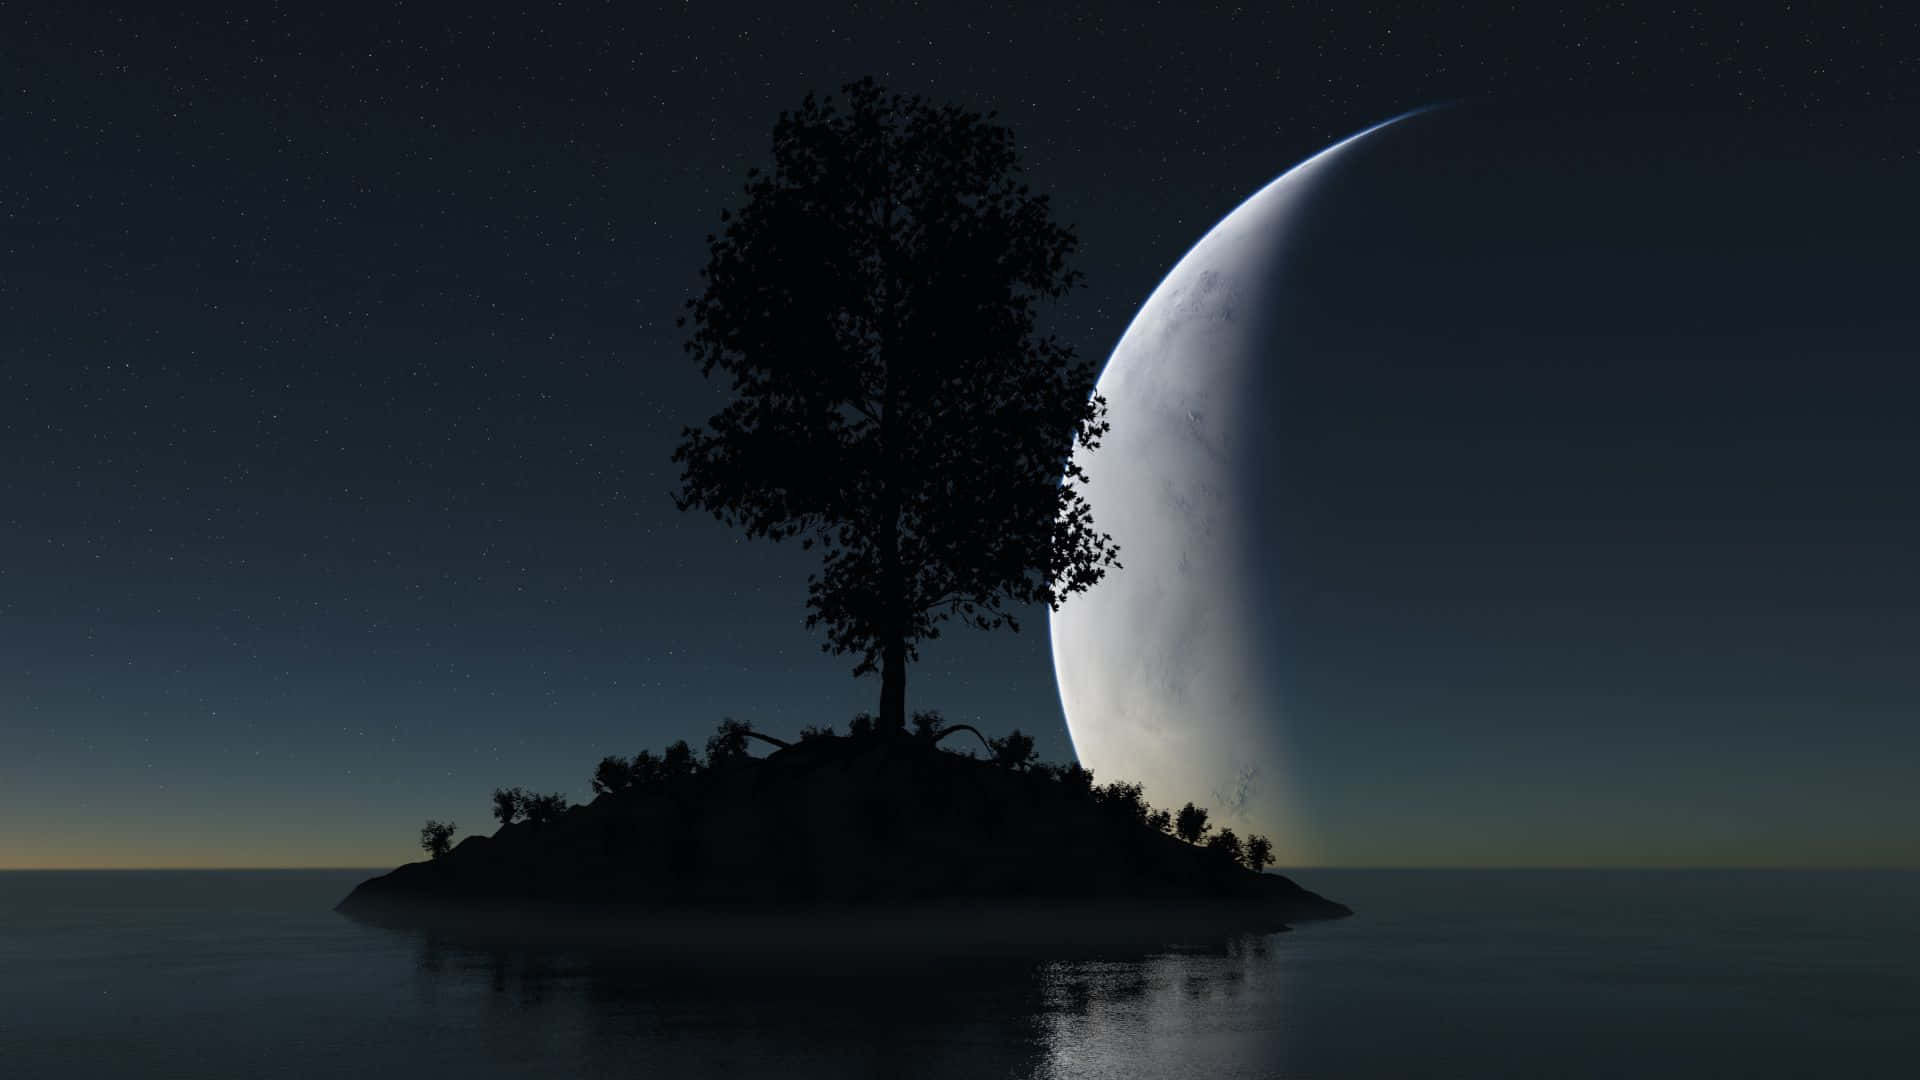 Mysterious Dark Island Under The Moonlight Wallpaper